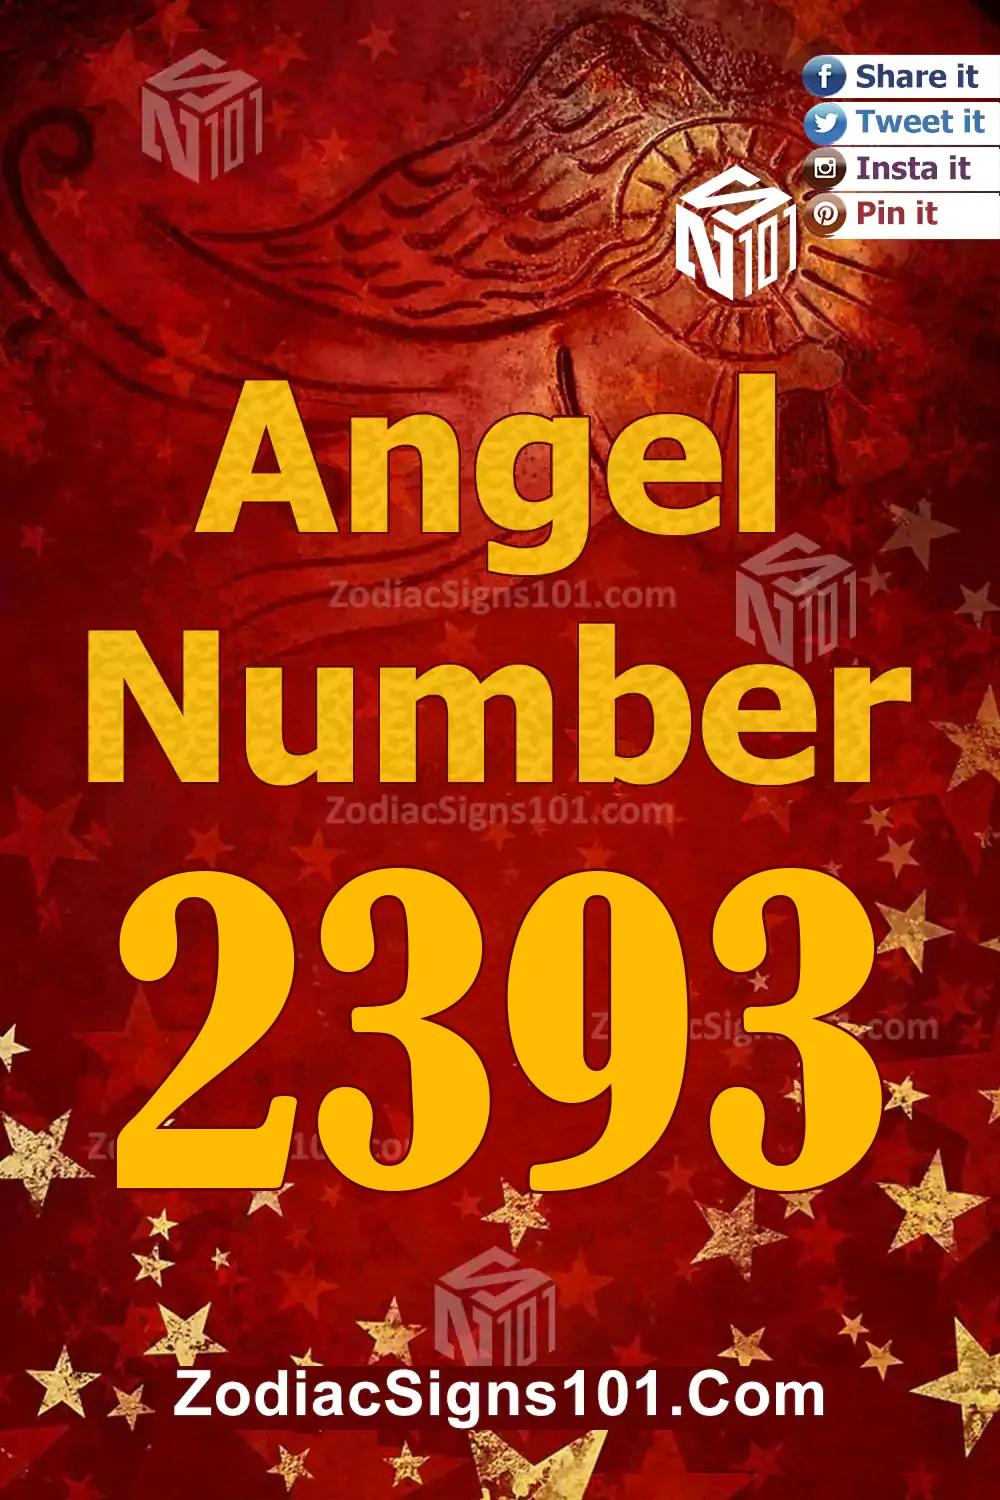 2393-Angel-Number-Meaning.jpg